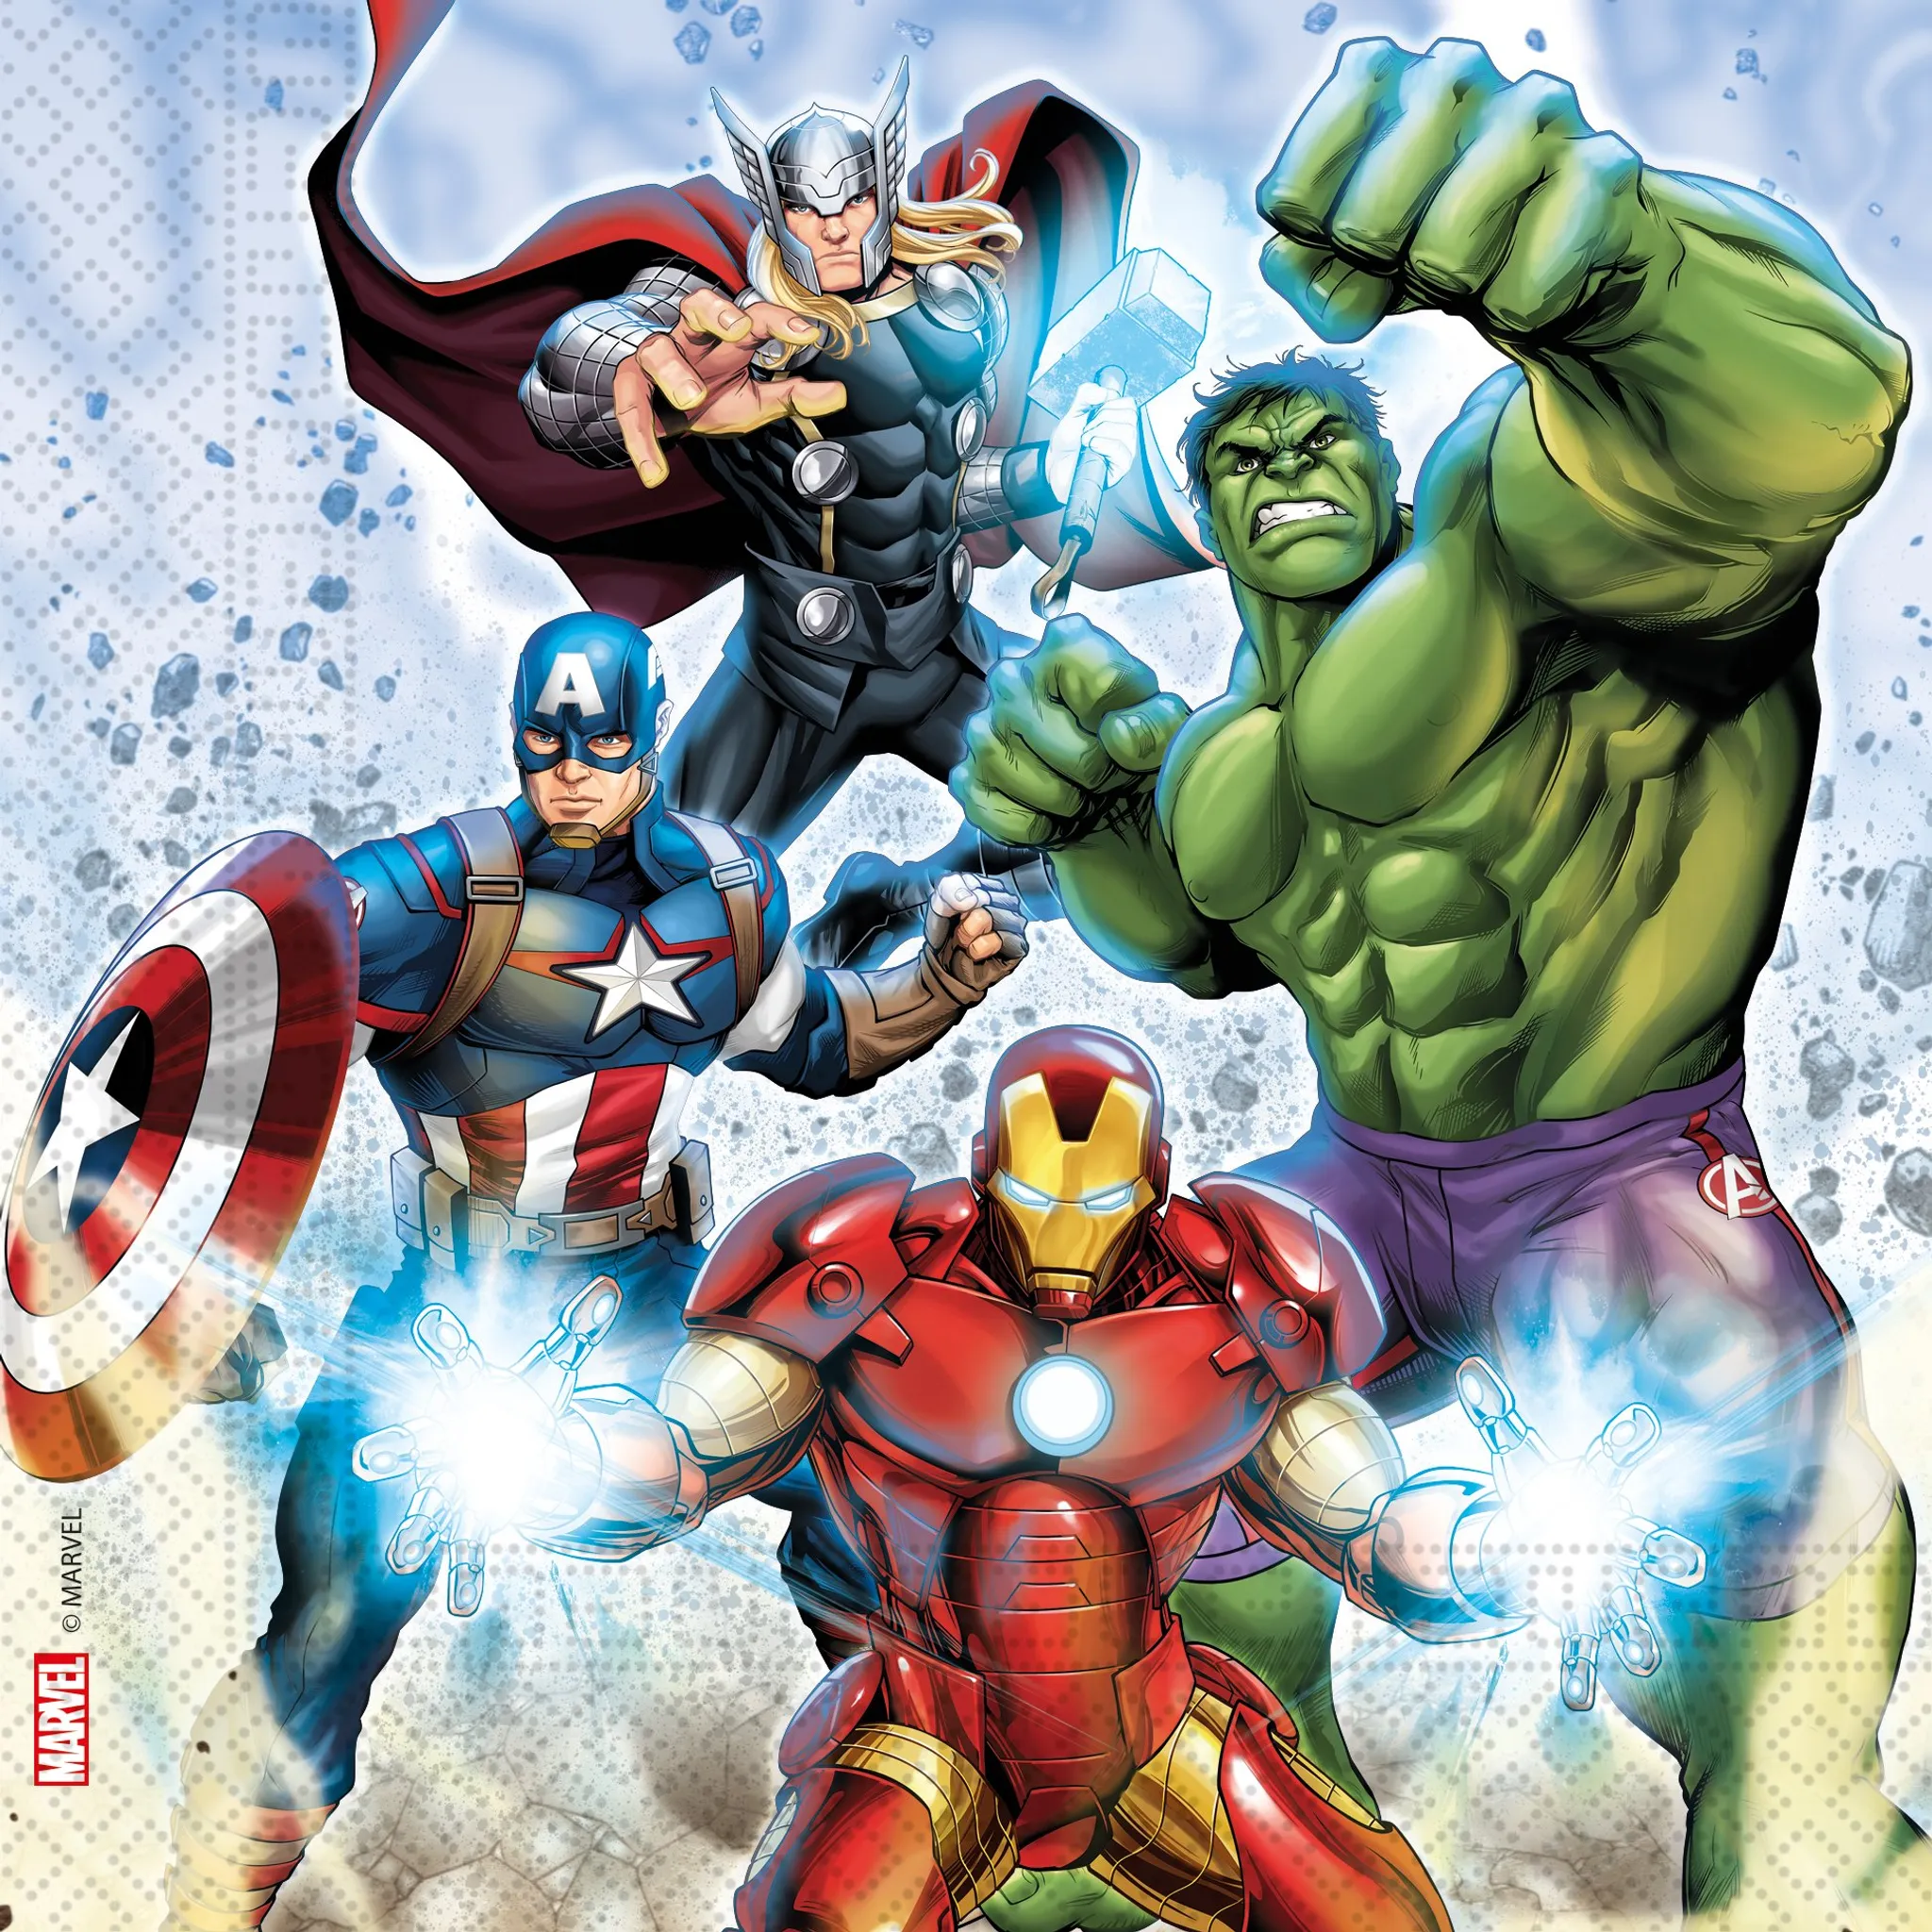 Servietten Avengers, 20 Stück, mit Hulk